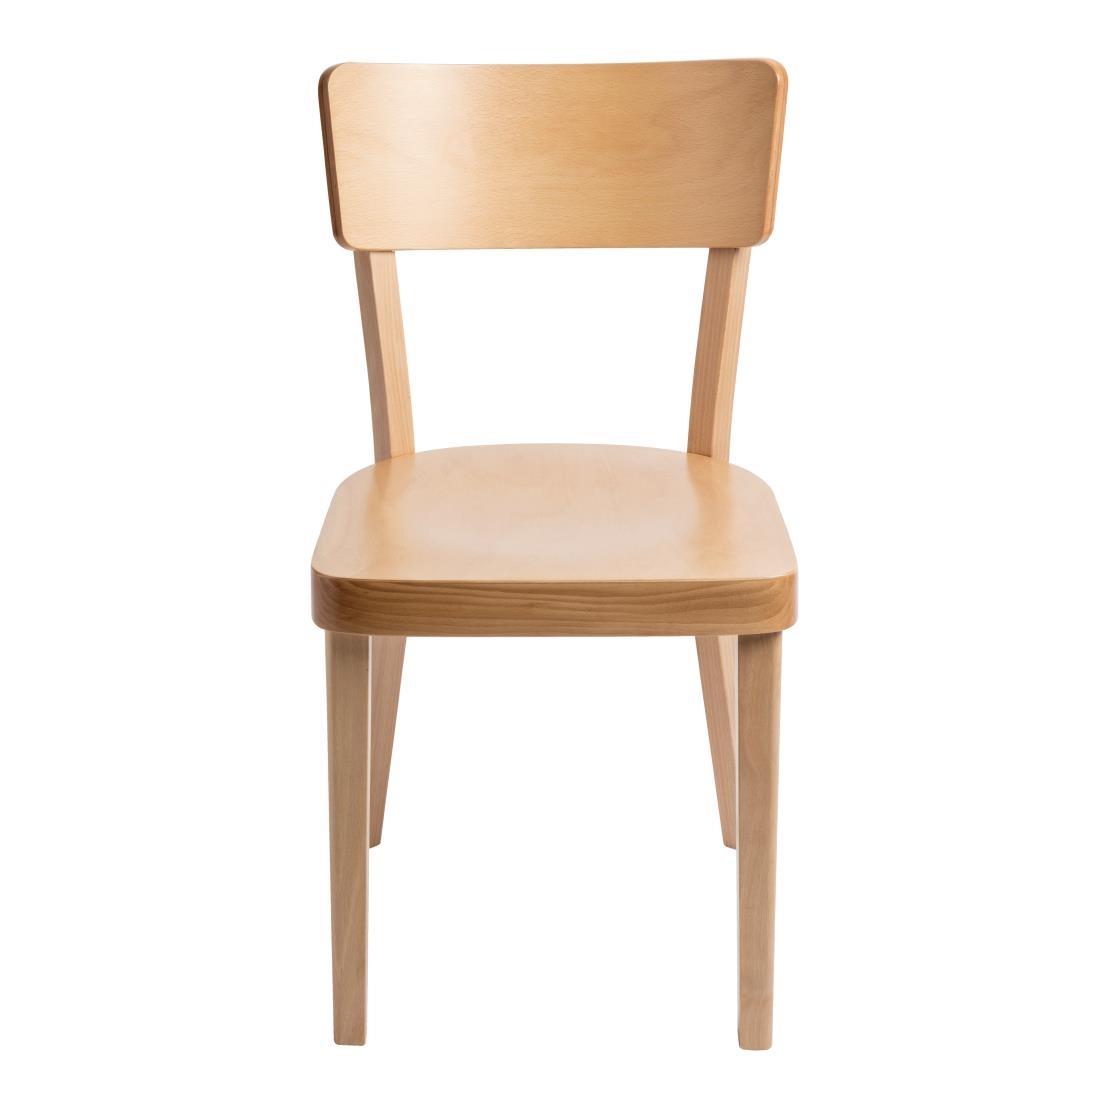 Fameg Plain Side Chairs Natural Beech (Pack of 2) - DC356  - 2